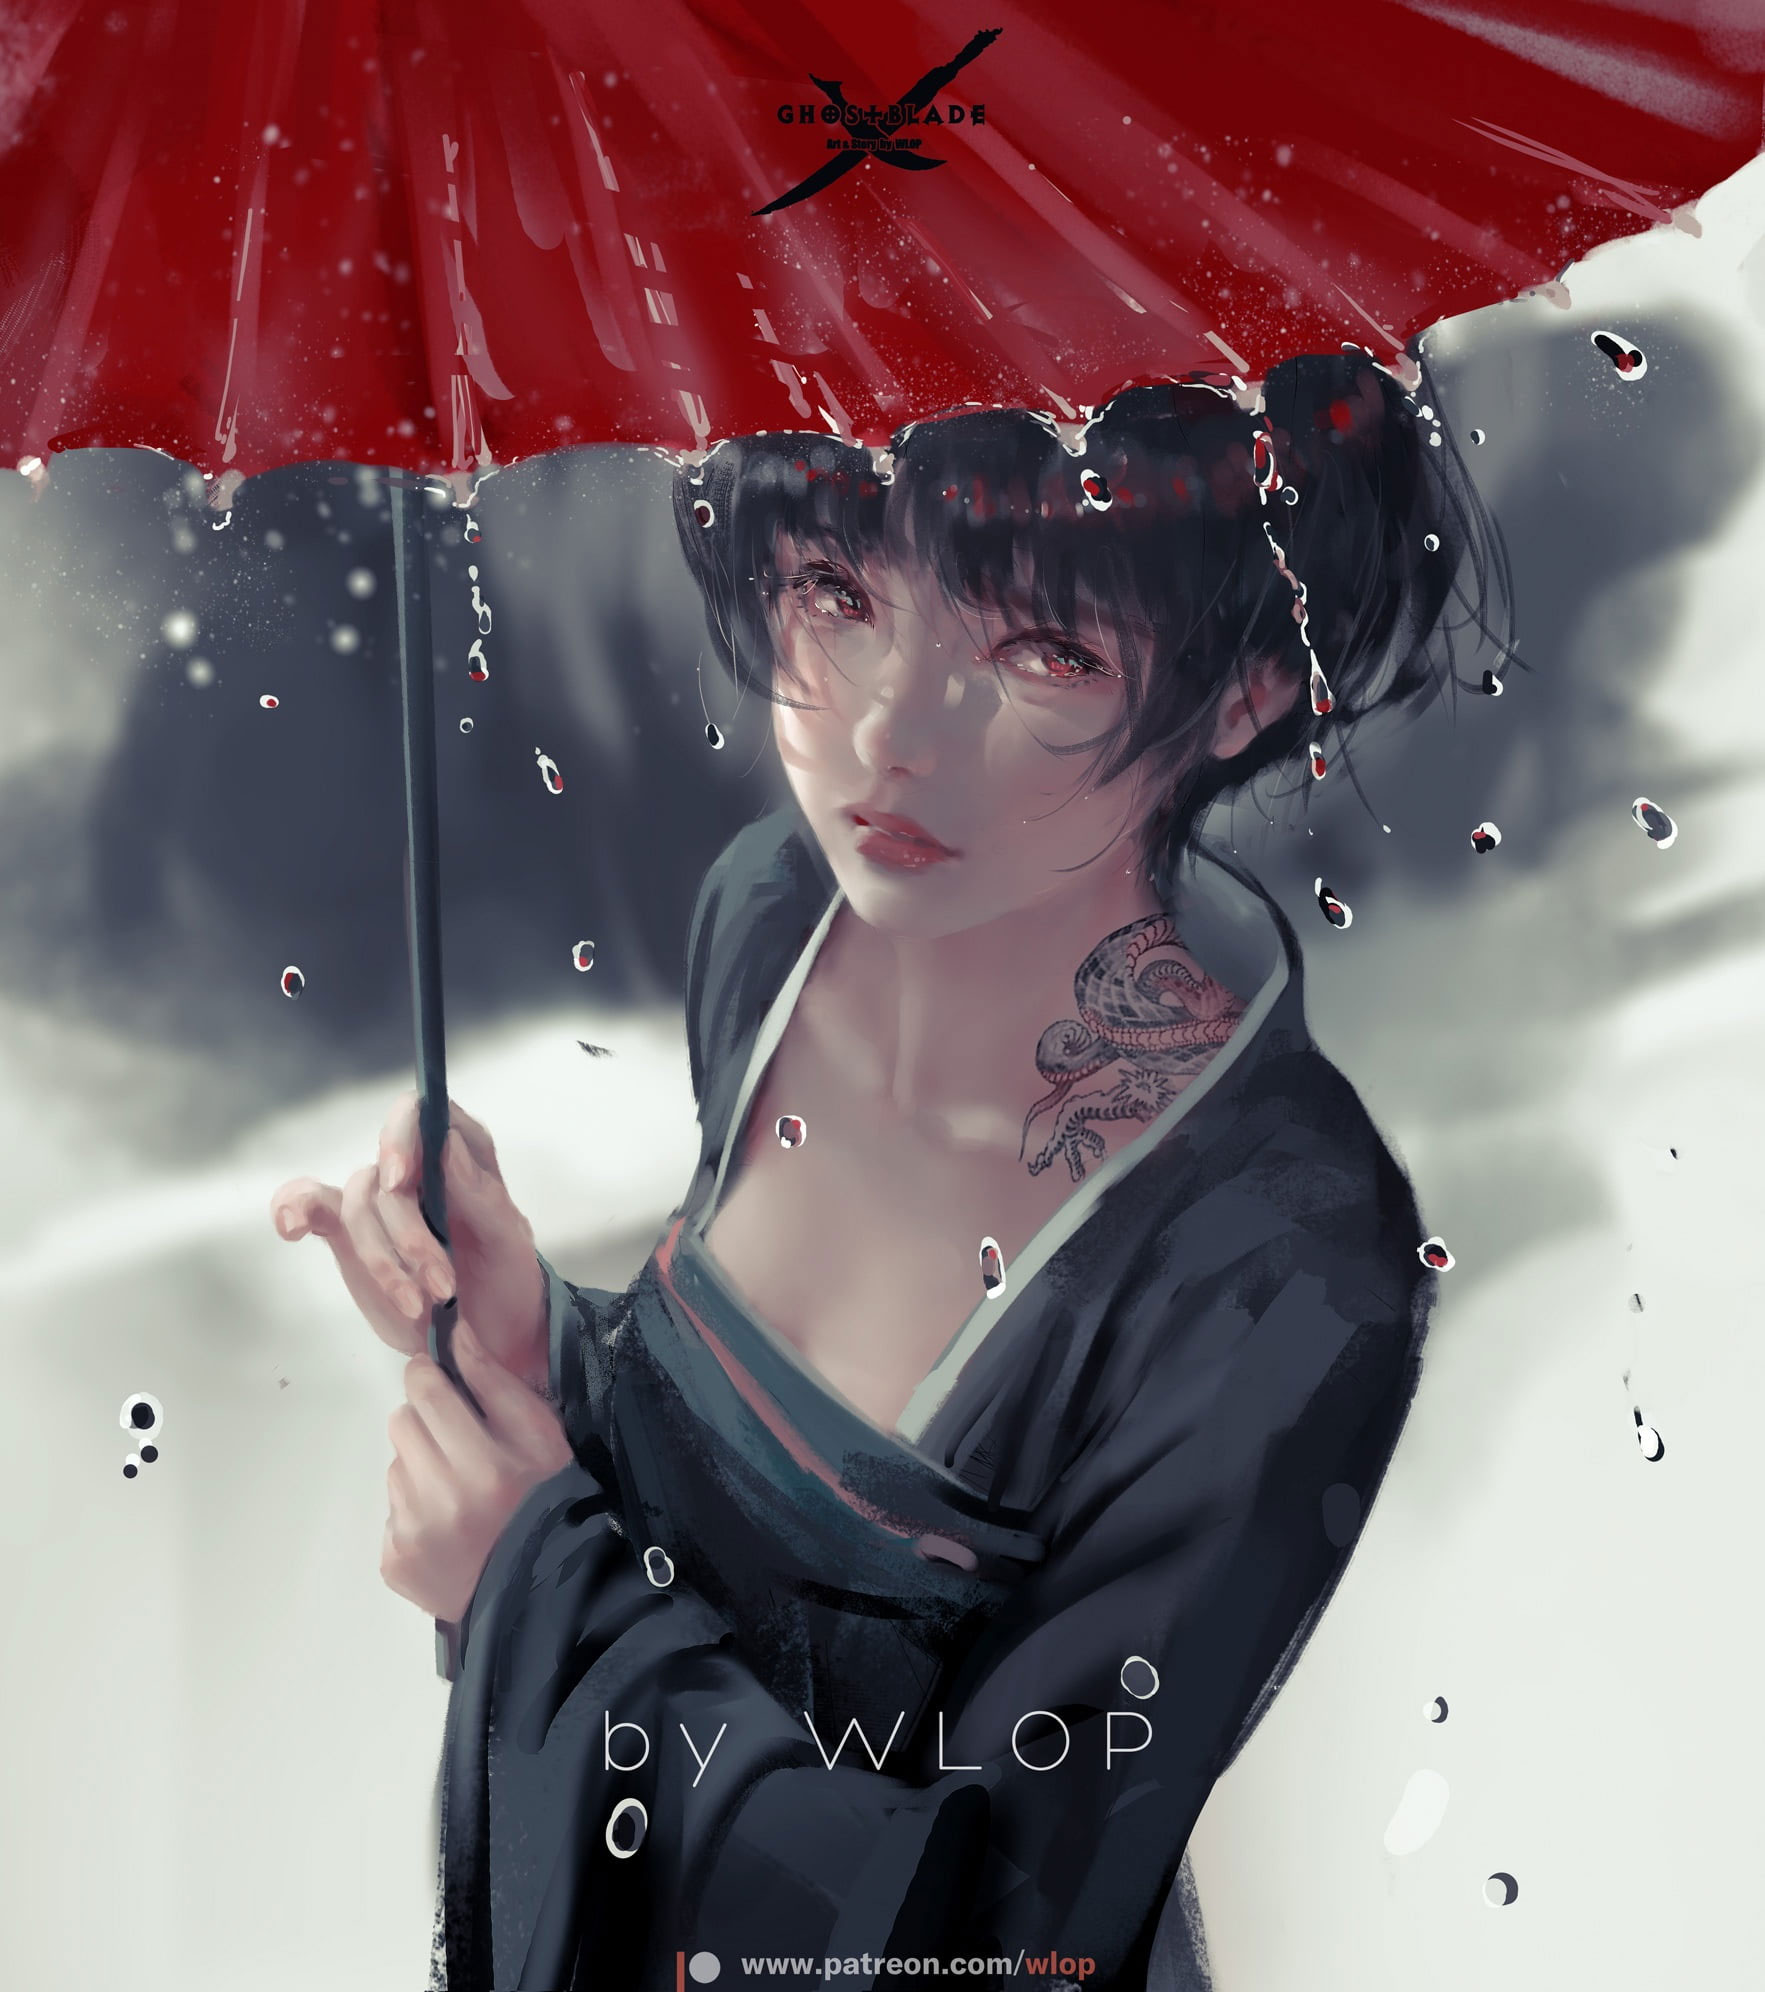 Wallpaper Wlop, Artwork, Digital Art, Rain, Umbrella, Women